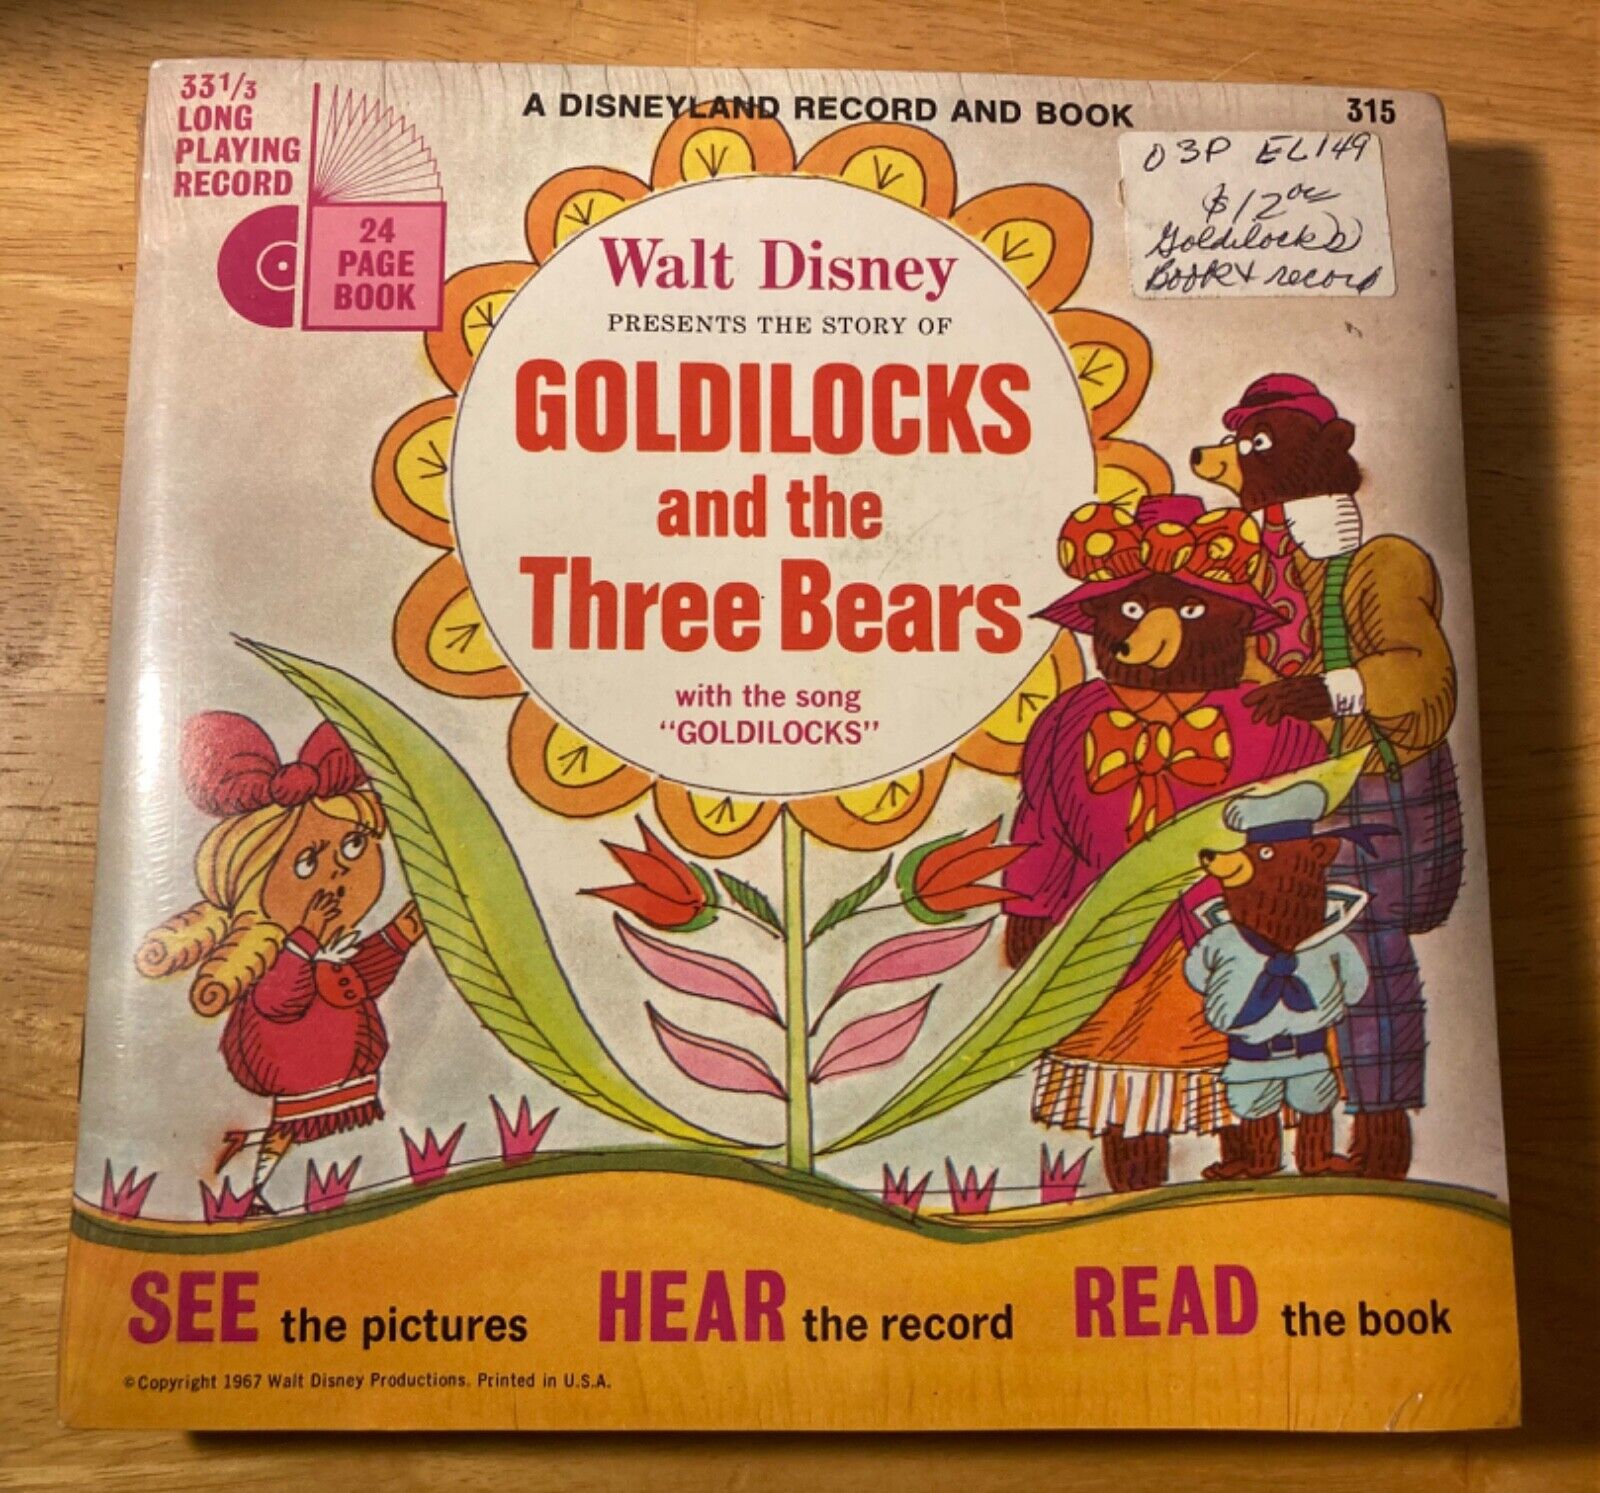 FACTORY SEALED - 1967 Walt Disney GoldiLocks and the three Bears Book Record